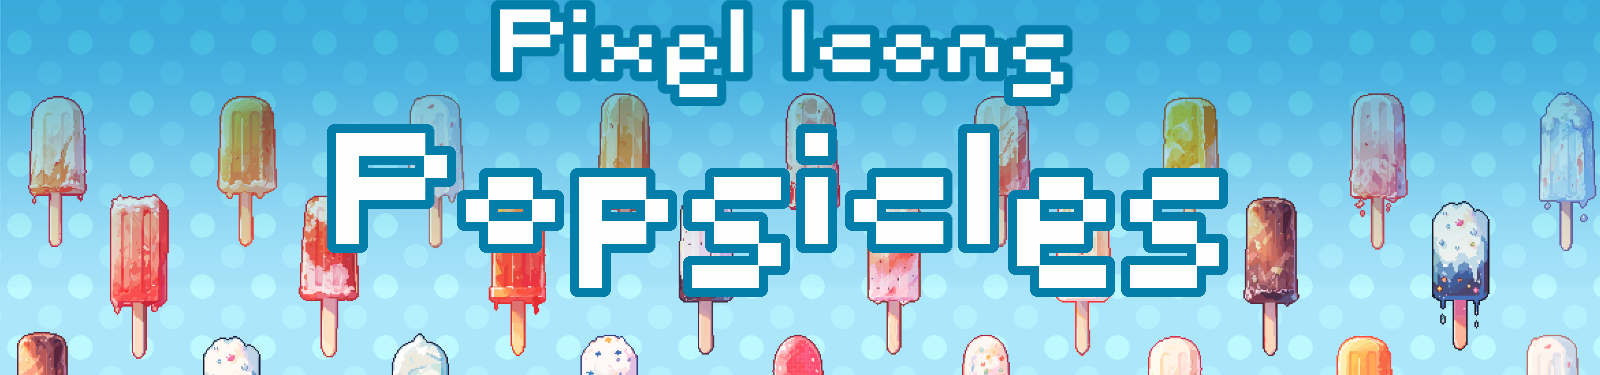 Pixel Icons: Popsicles